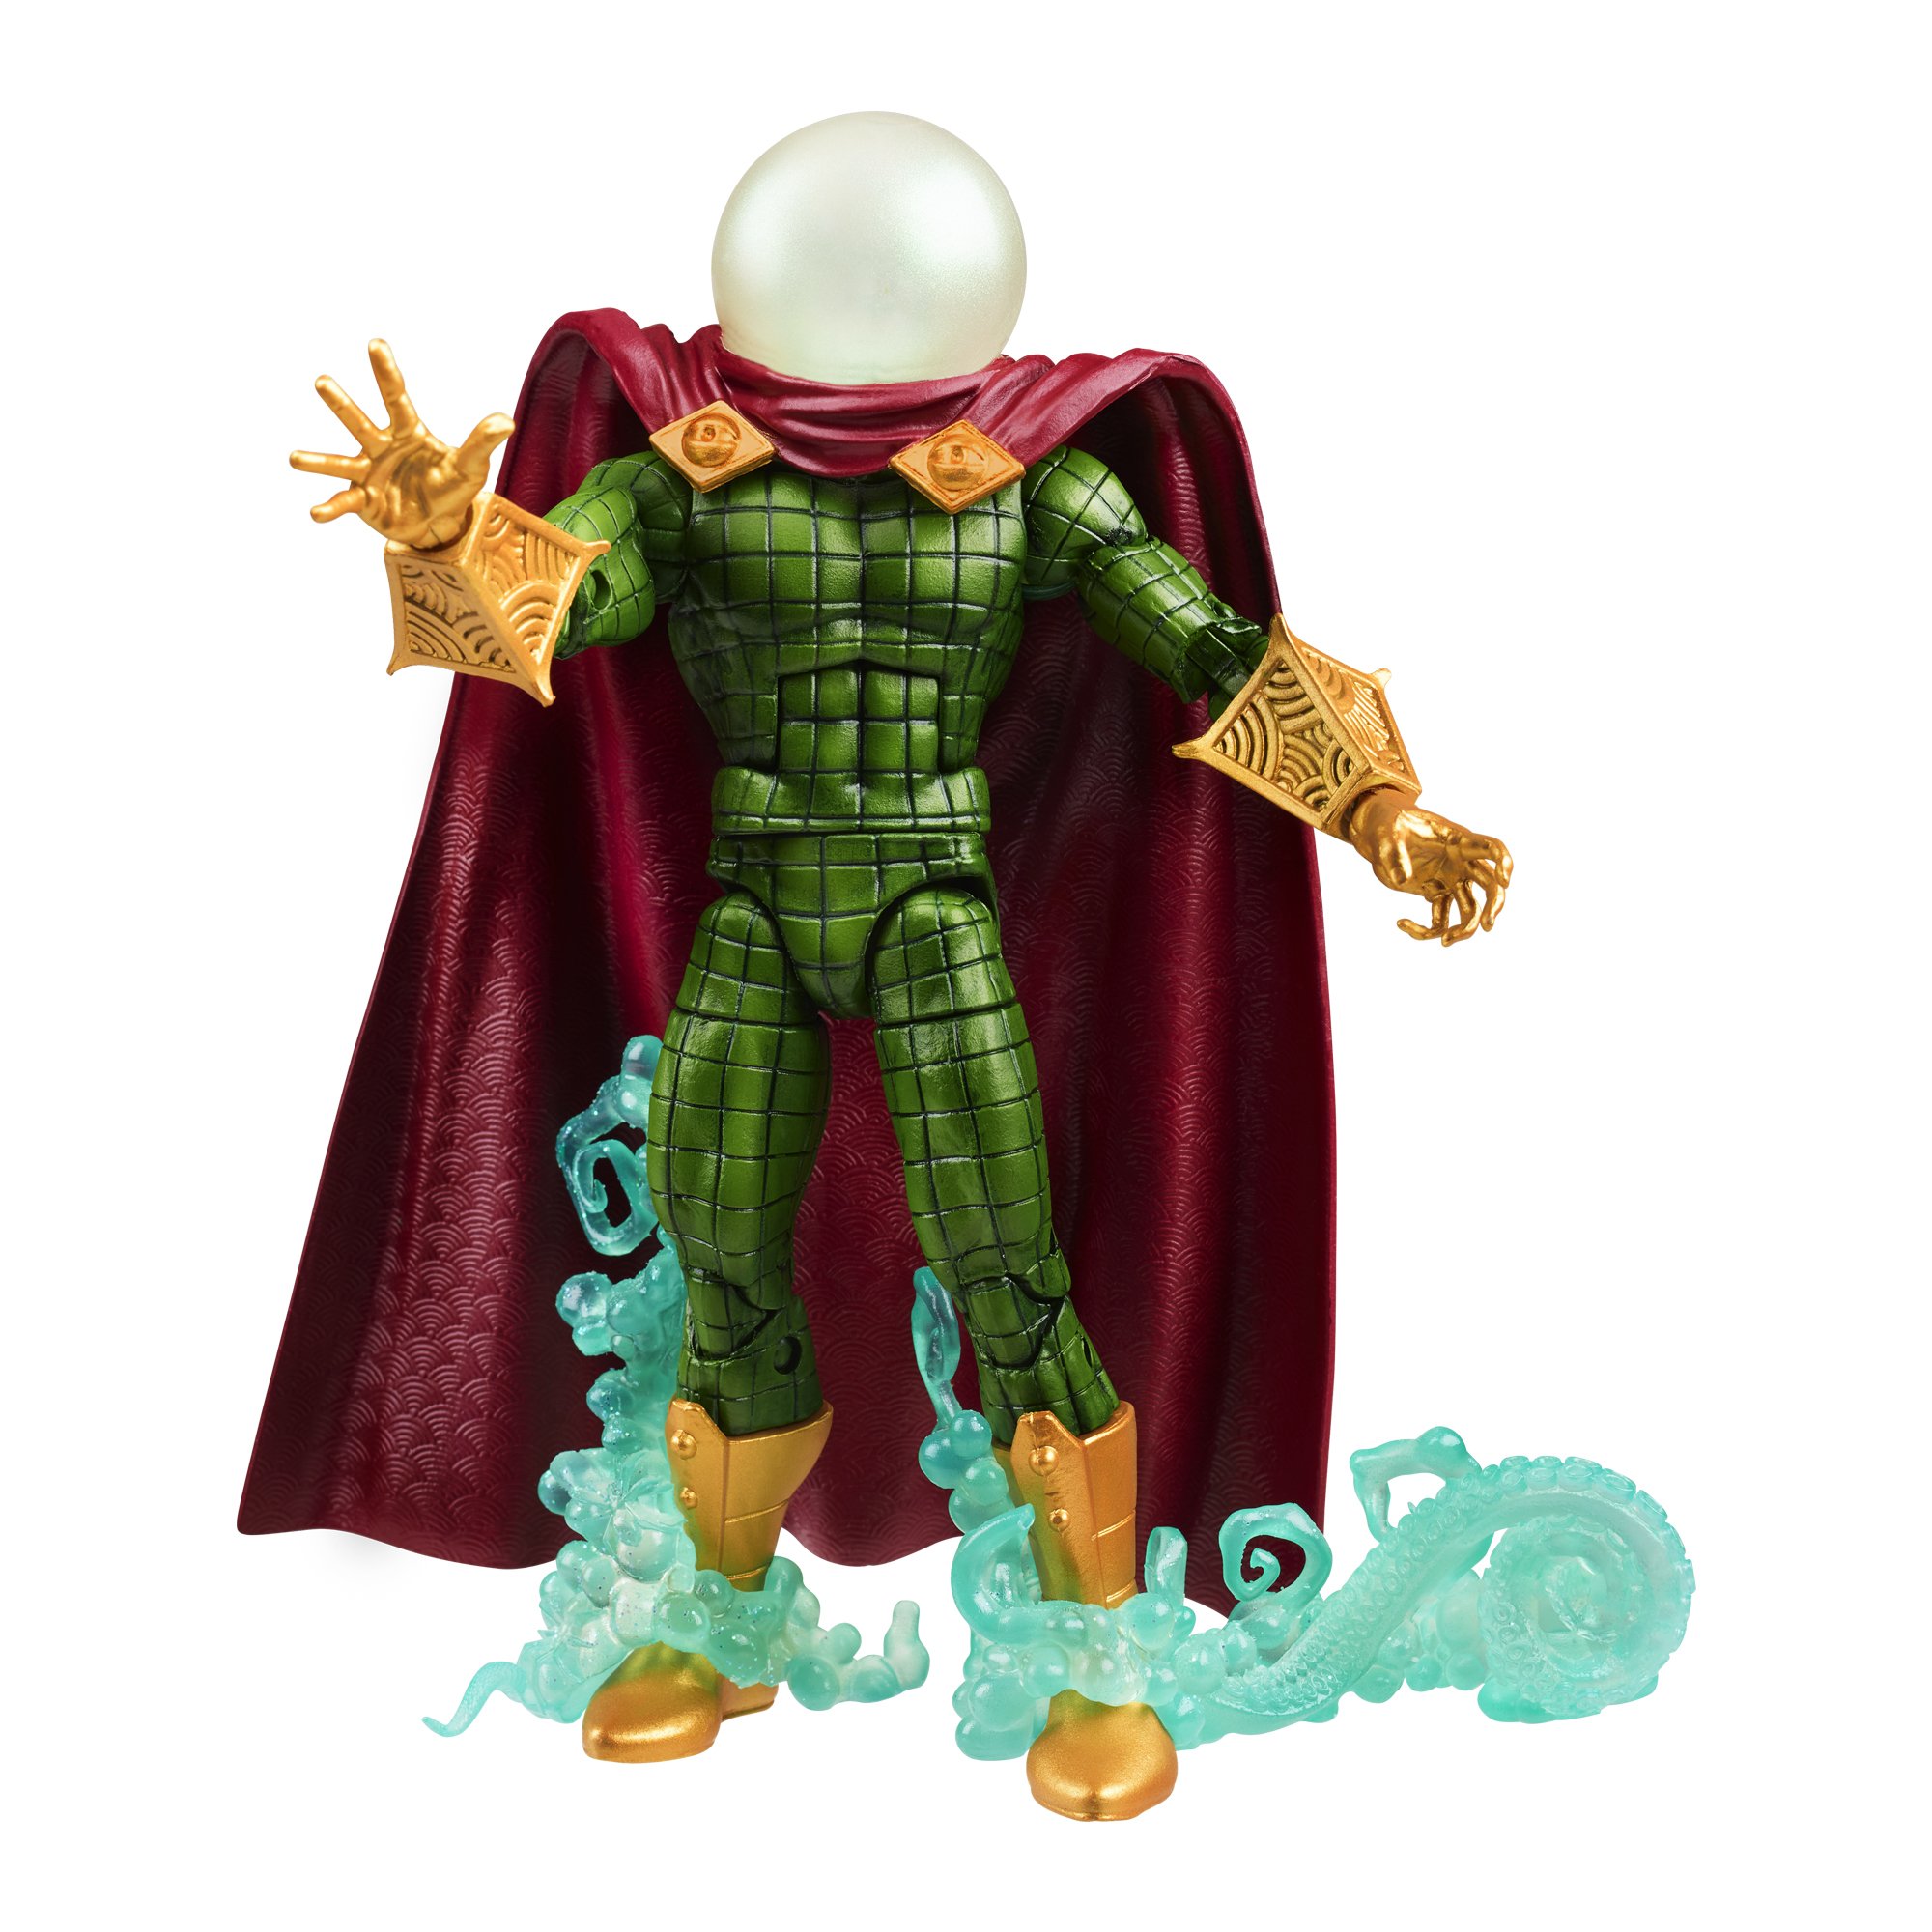 Hasbro reveals Marvel Legends Retro/Classic Mysterio